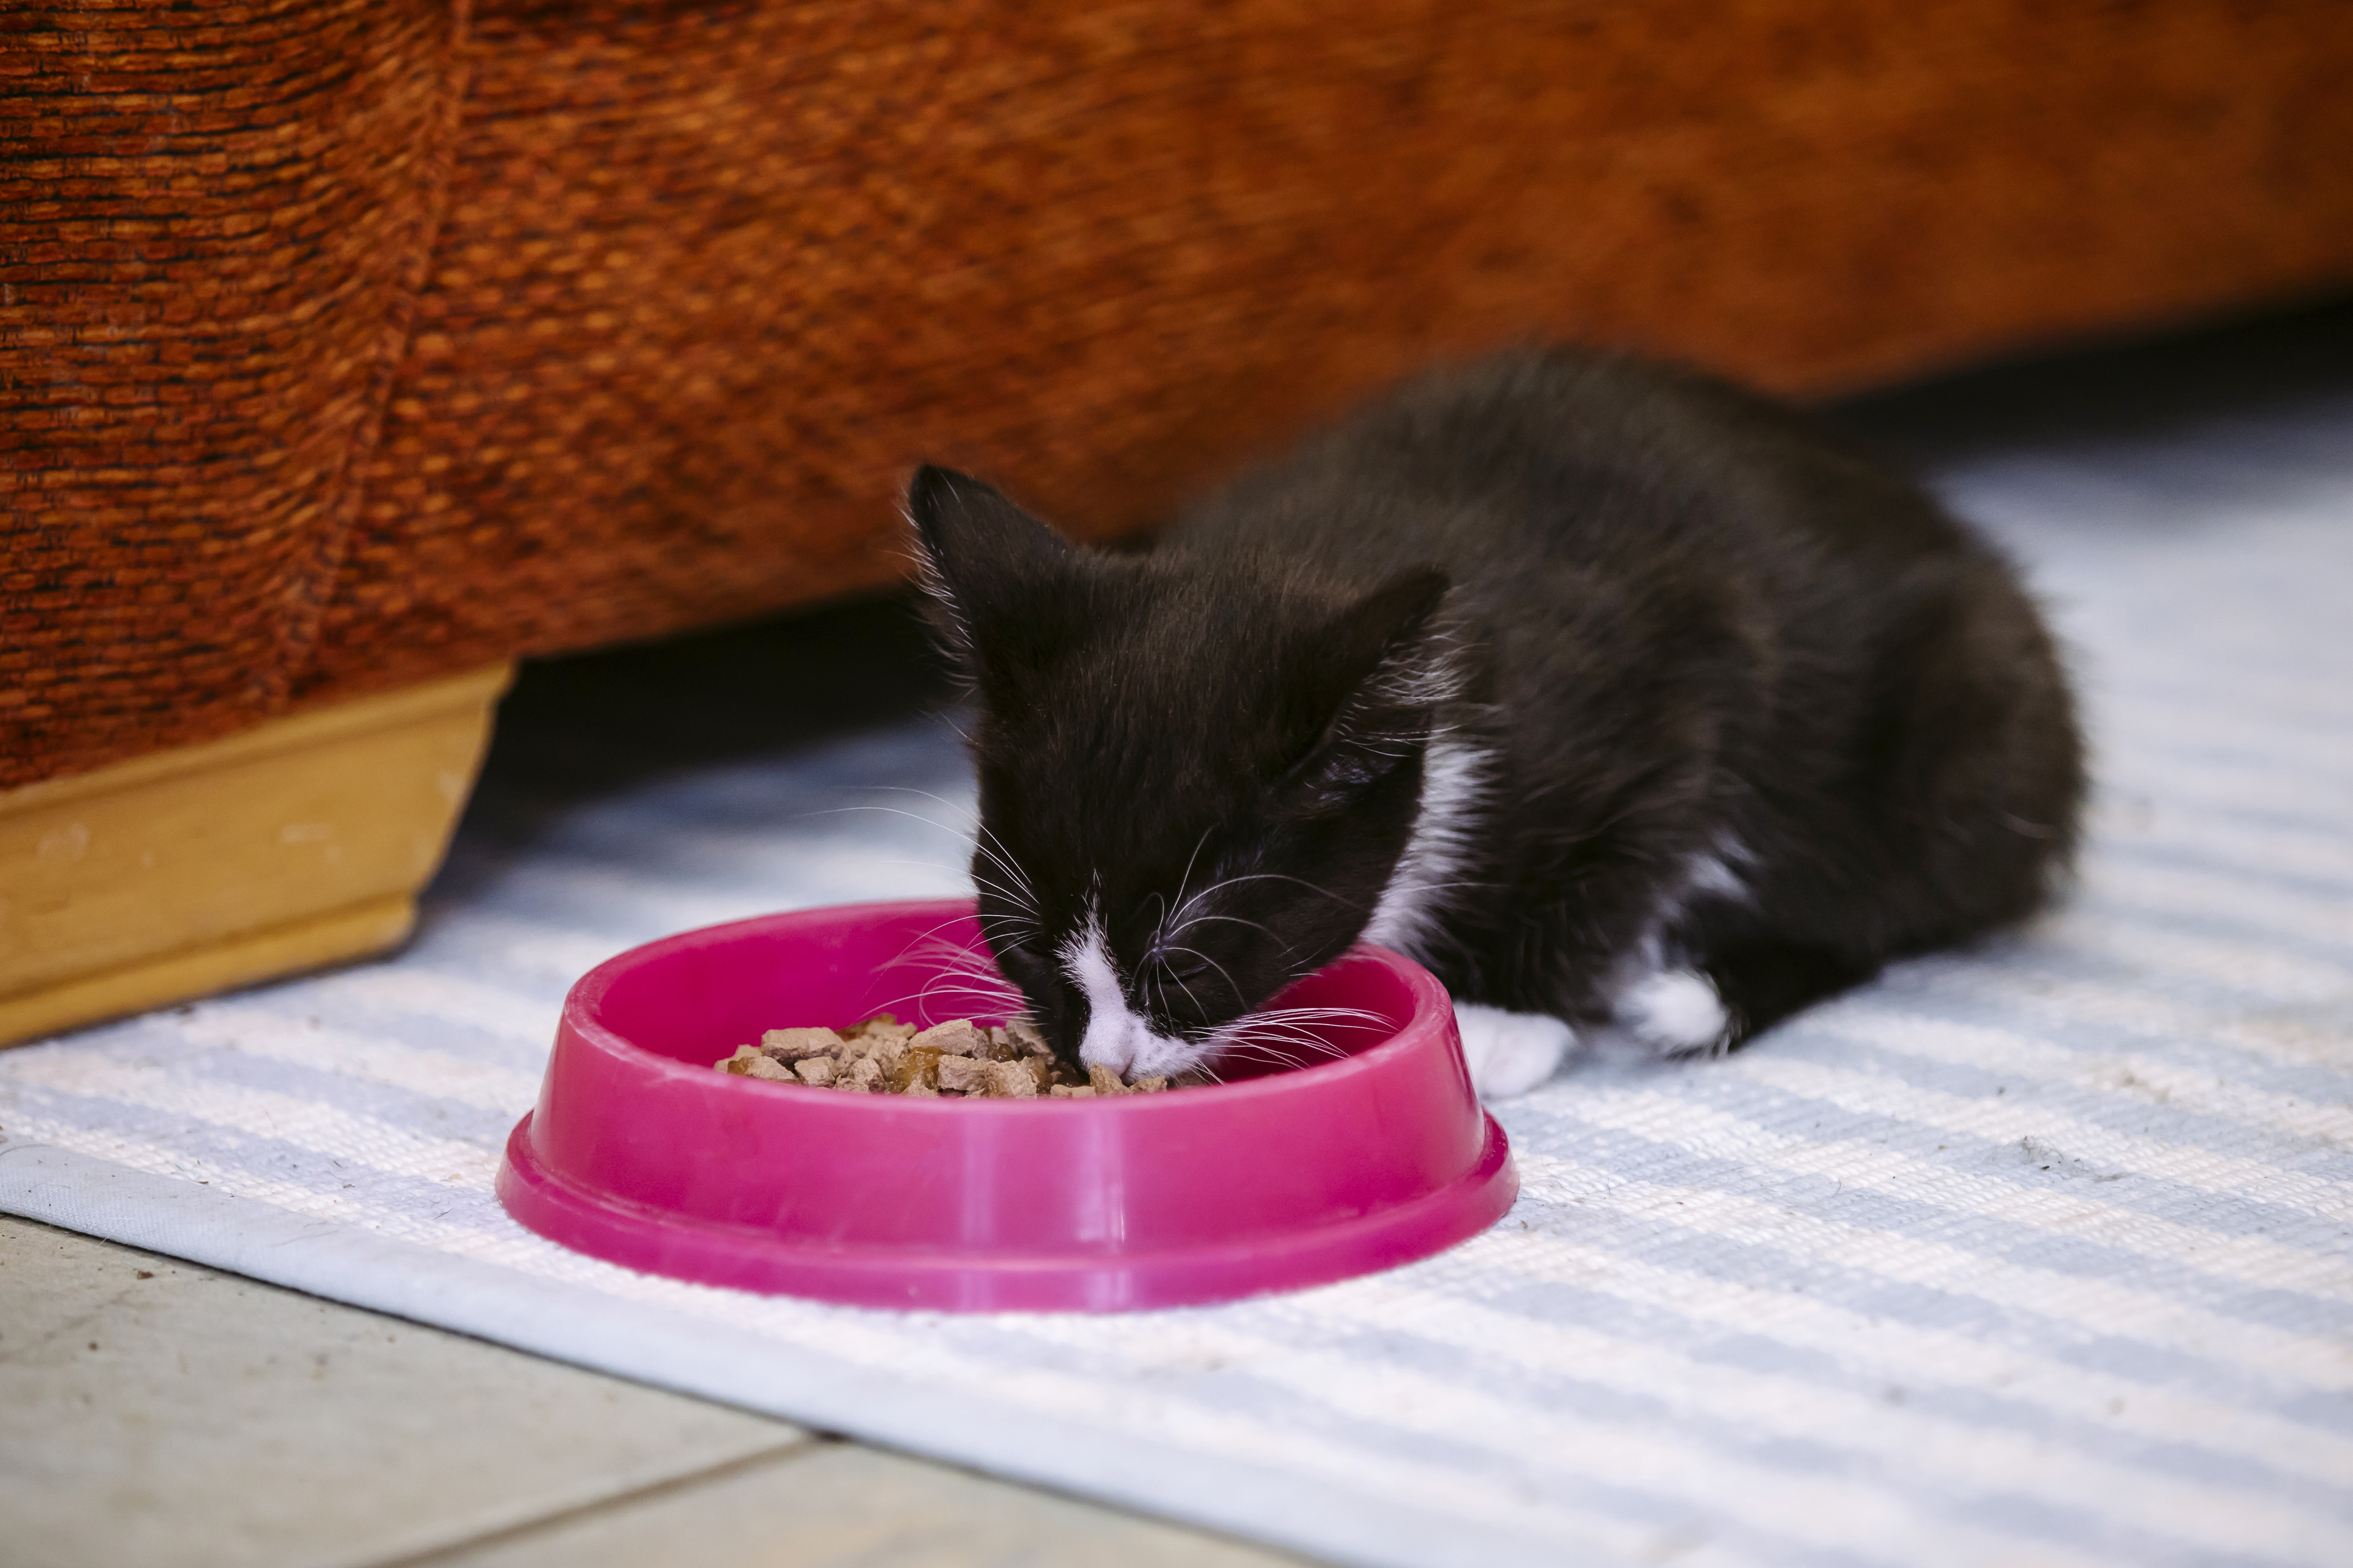 Black kitten eating out of pink bowl